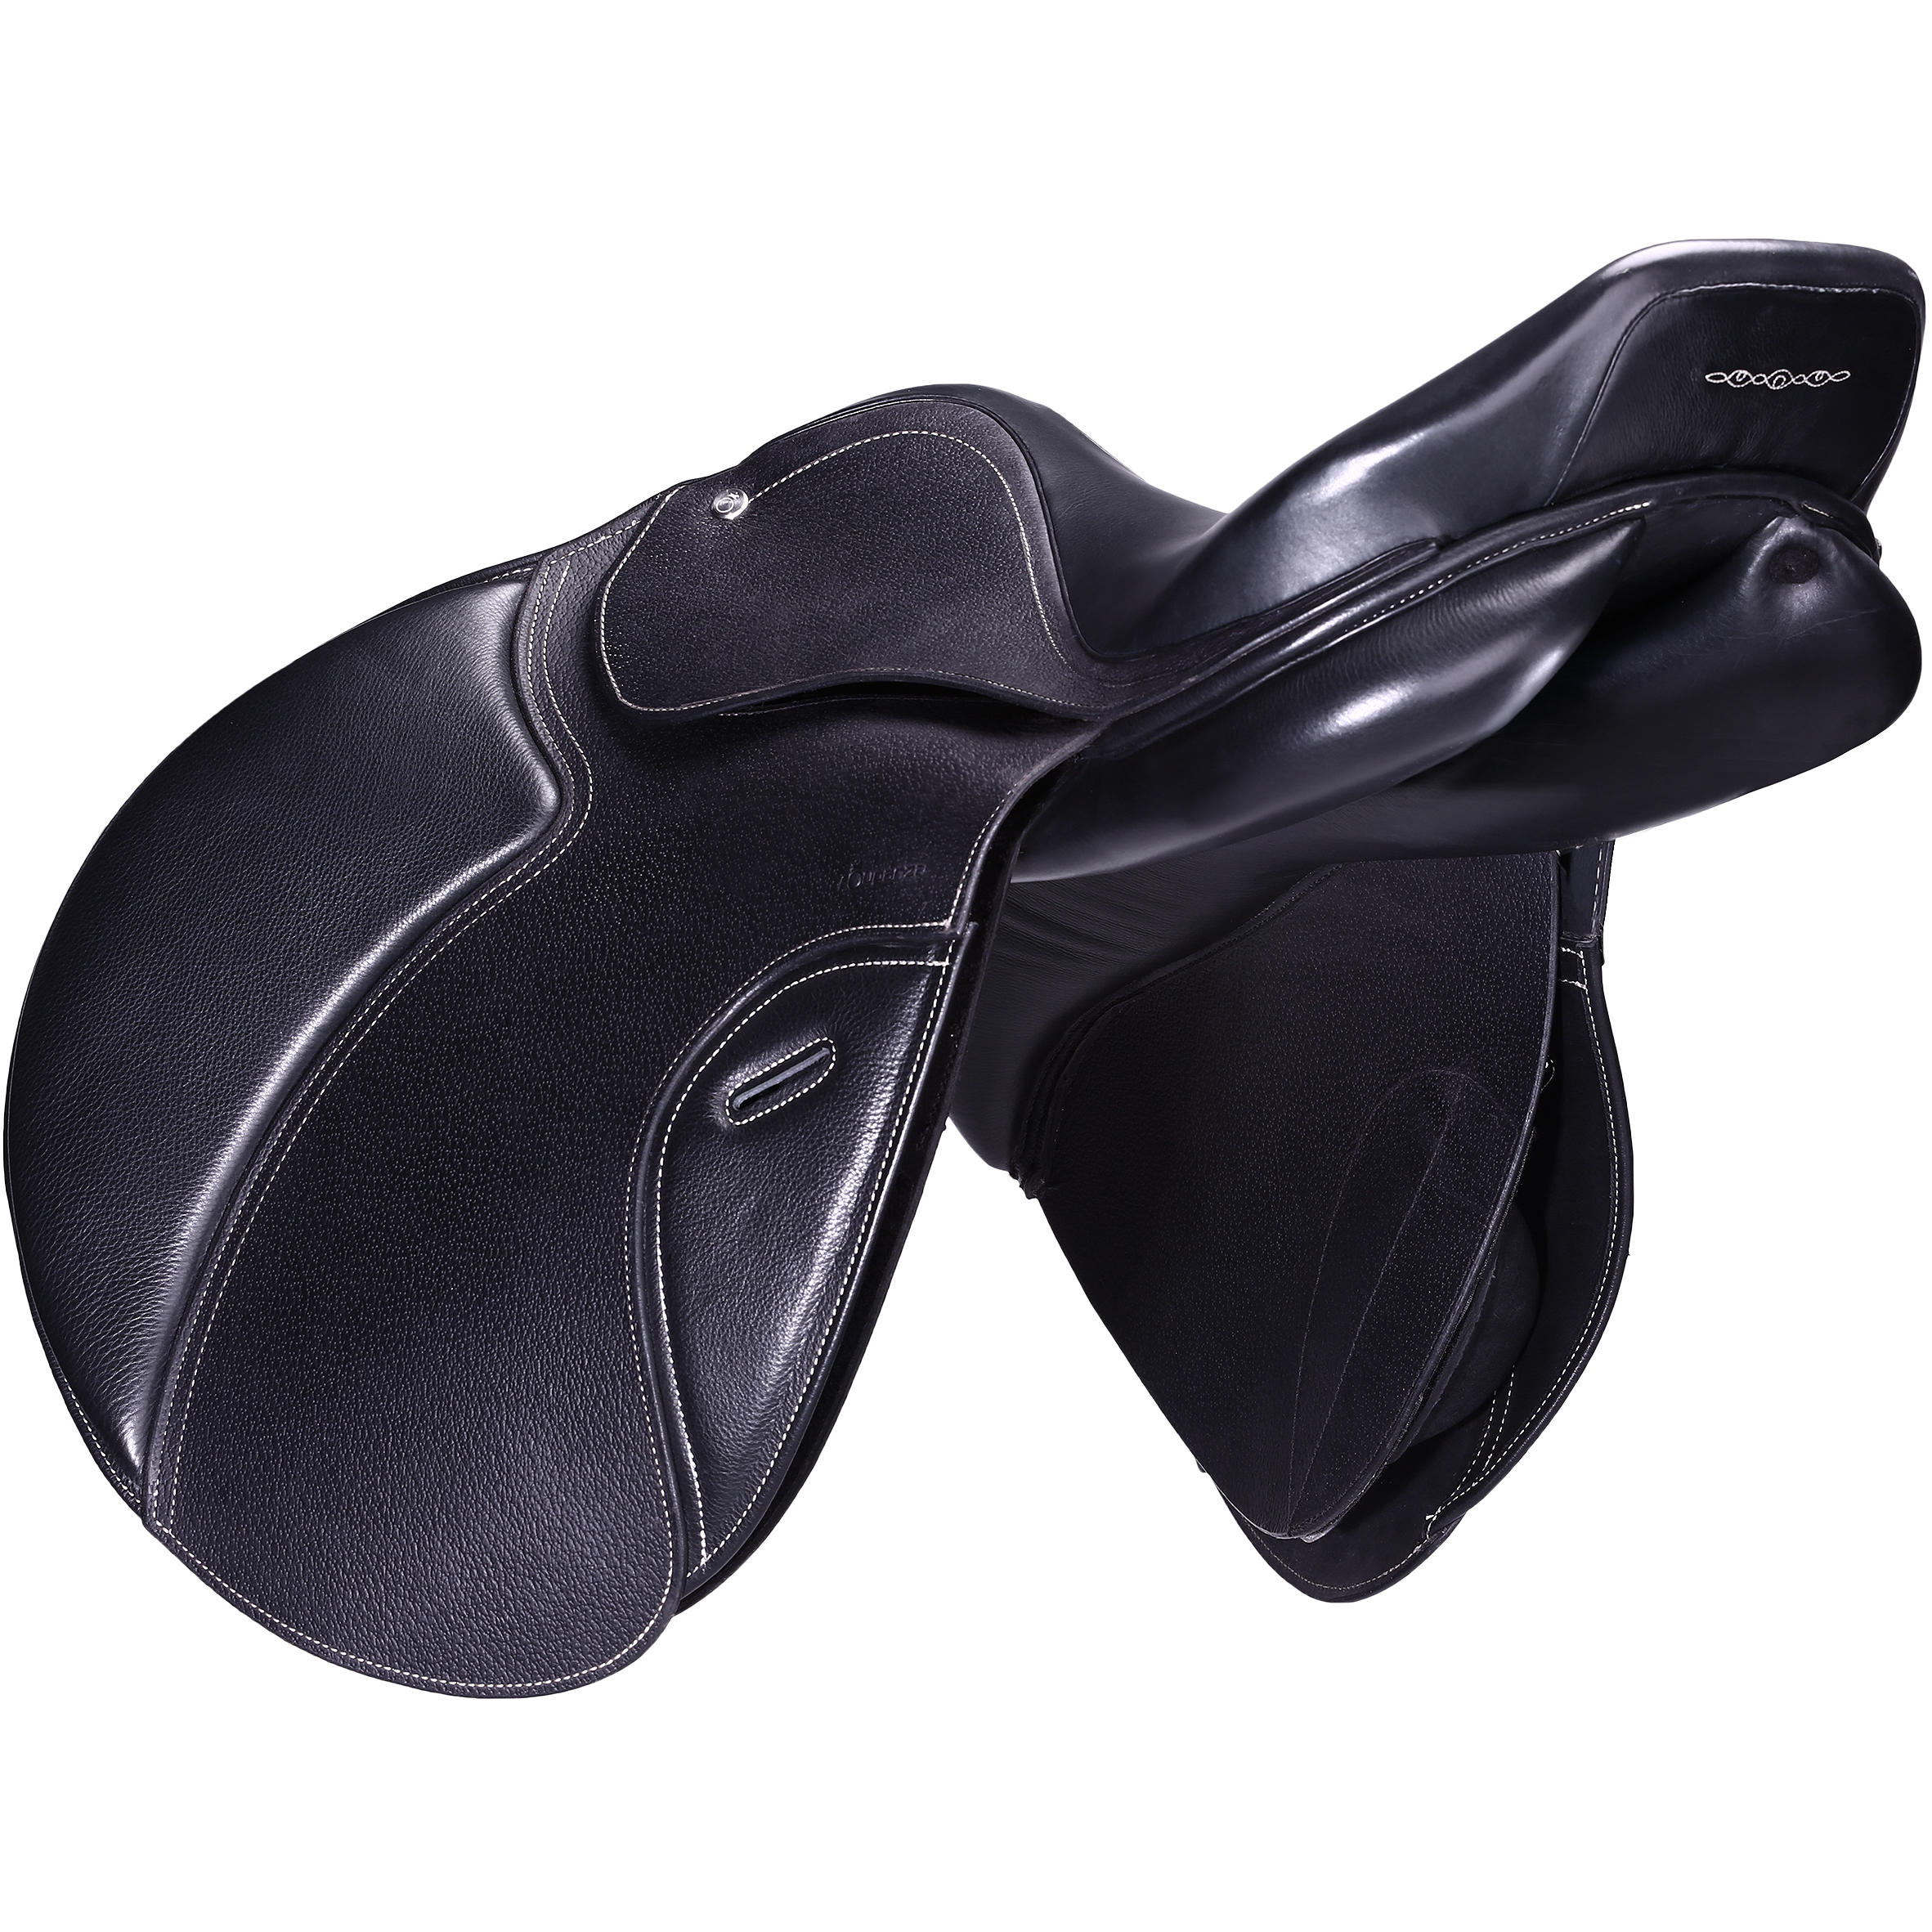 17.5" Versatile Leather Horse Riding Saddle for Horse Paddock - Black 2/16